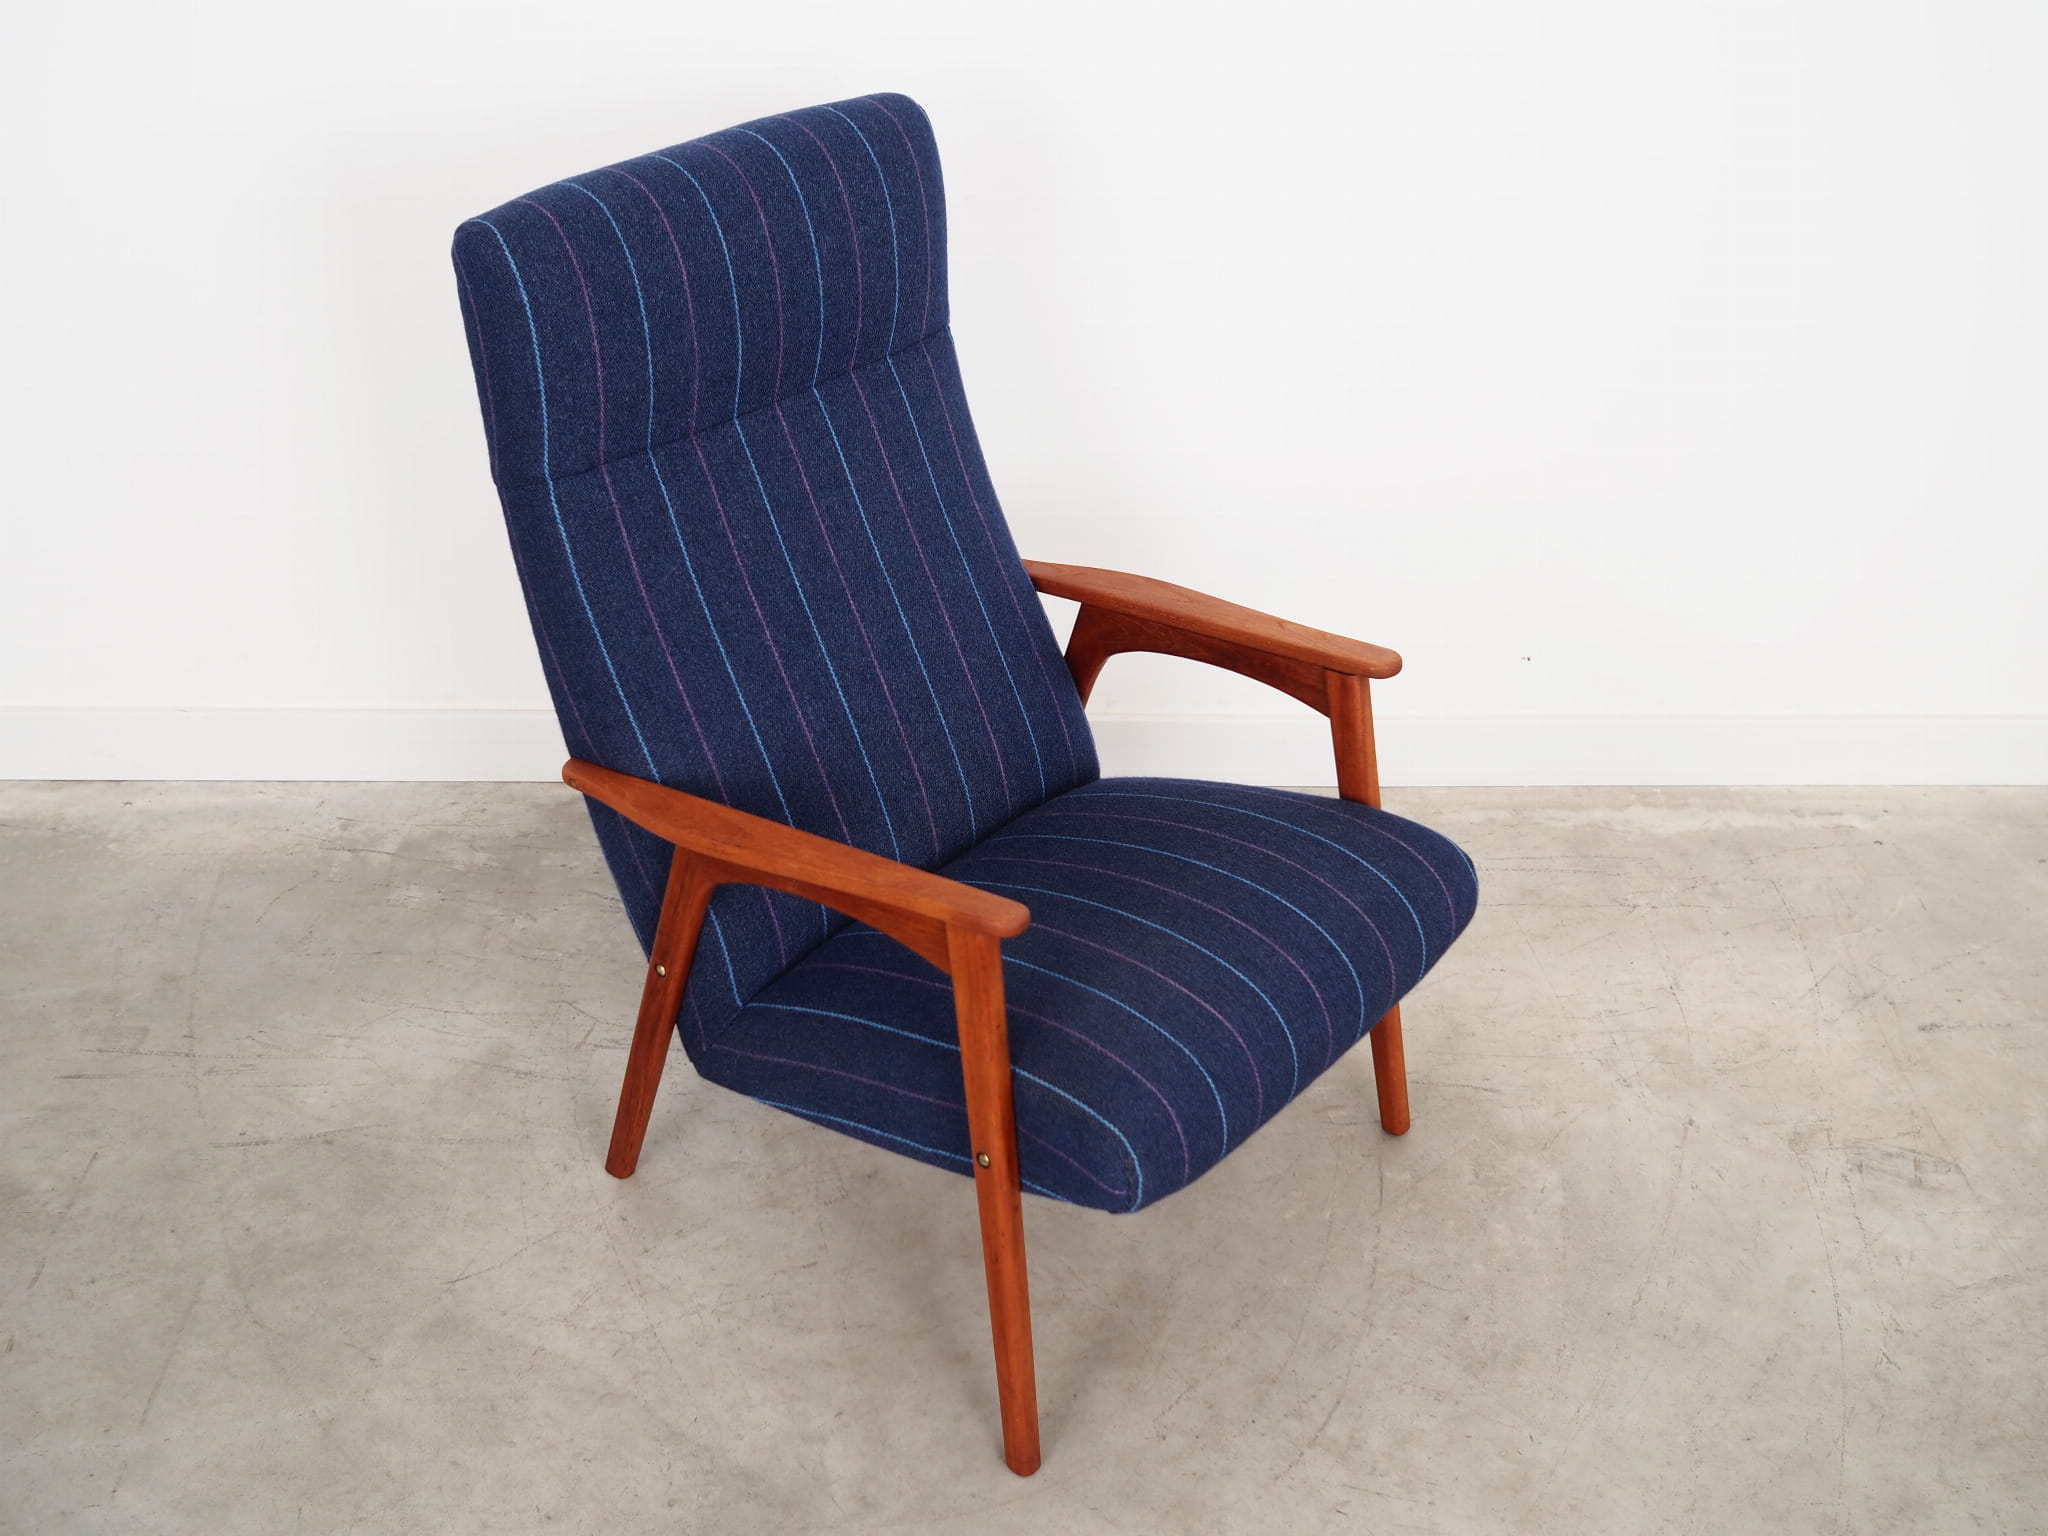 Vintage Stuhl Teakholz Wolle Blau 1970er Jahre